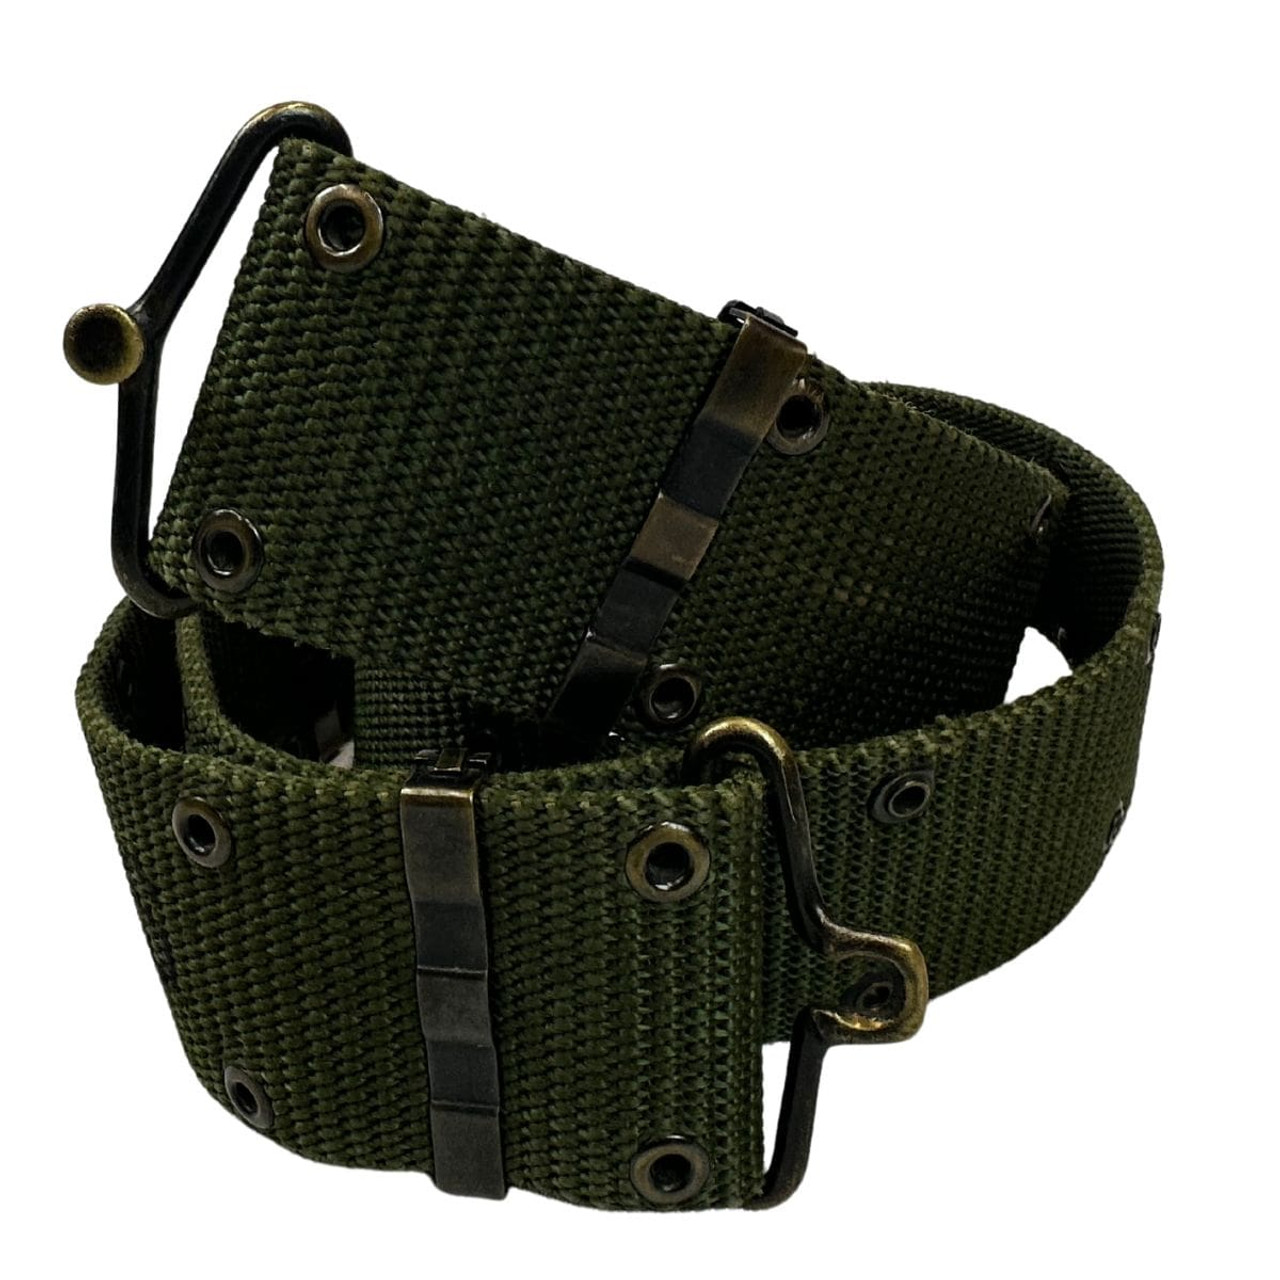  Olive Drab Marine Corp Style Quick Release Pistol Belt